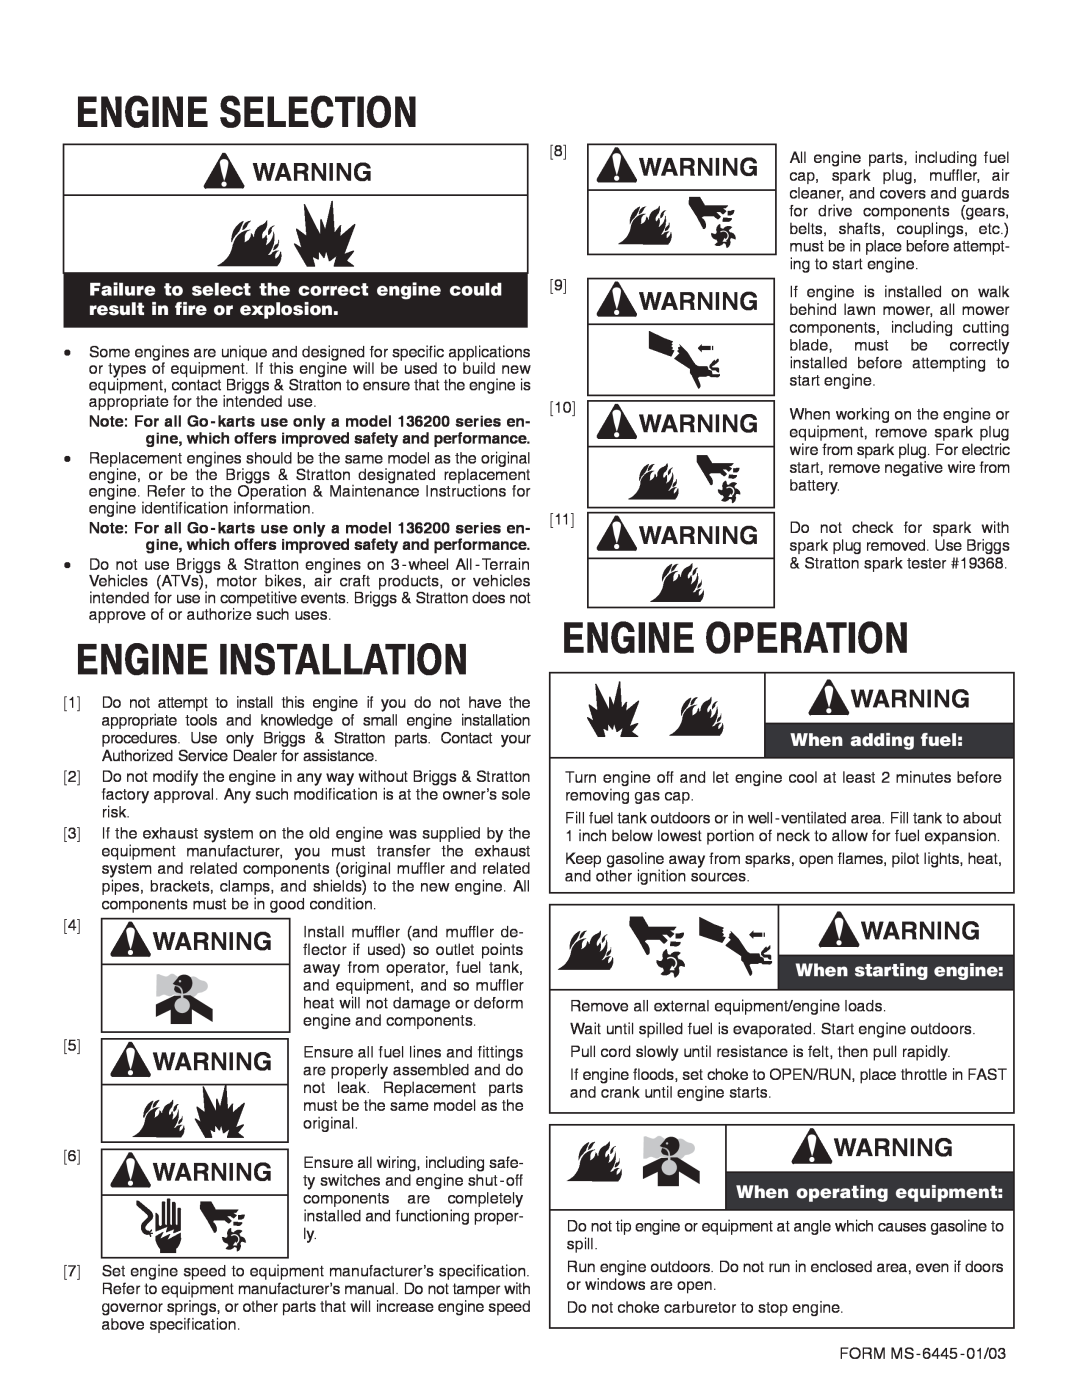 Briggs & Stratton 14FBPC Engine Selection, Engine Installation, Engine Operation, When adding fuel, When starting engine 